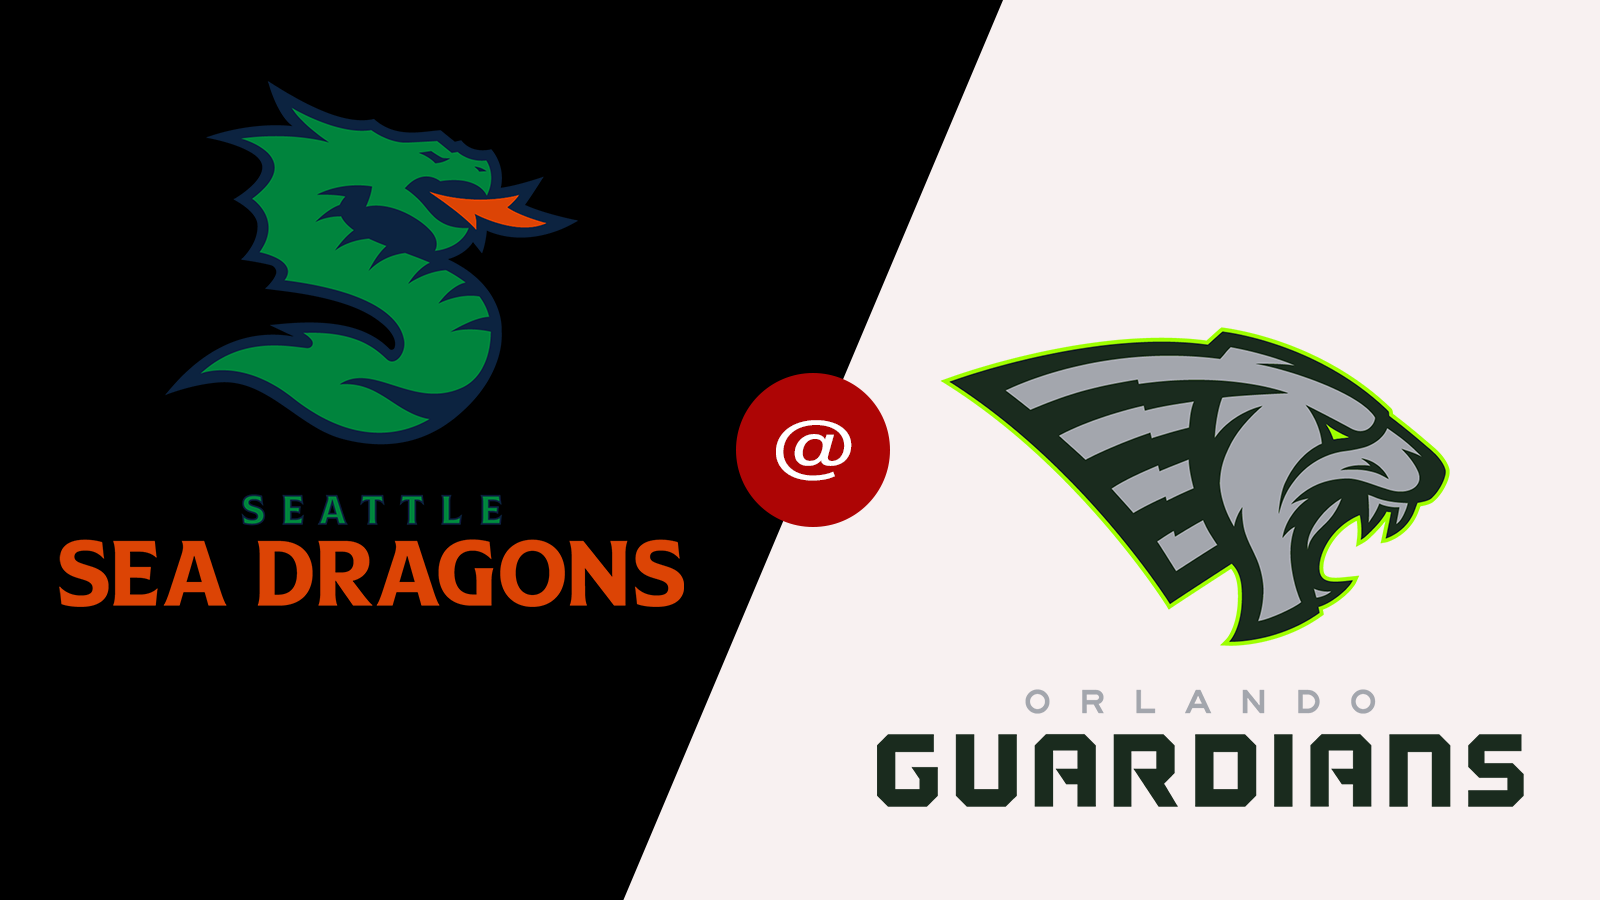 Seattle Sea Dragons vs. Orlando Guardians Prediction and Preview